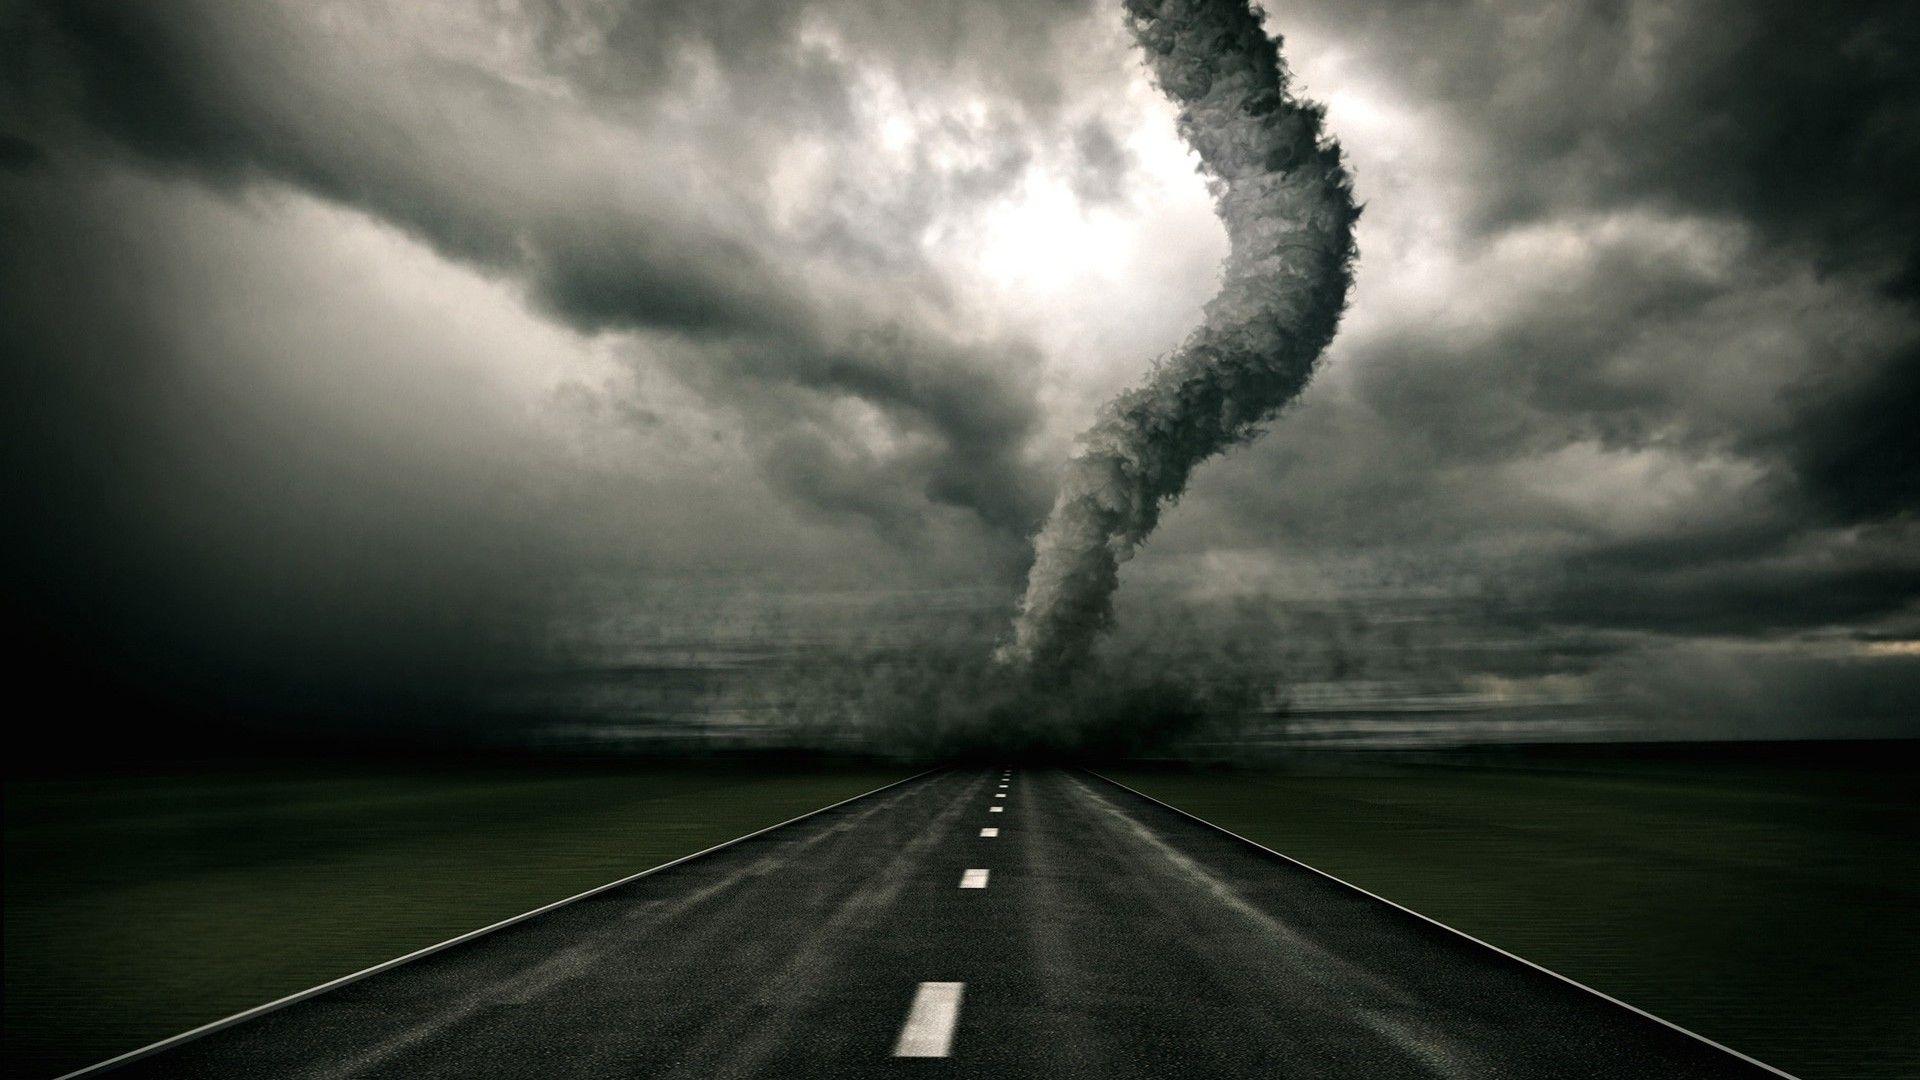 Tornado Background Images  Free Download on Freepik